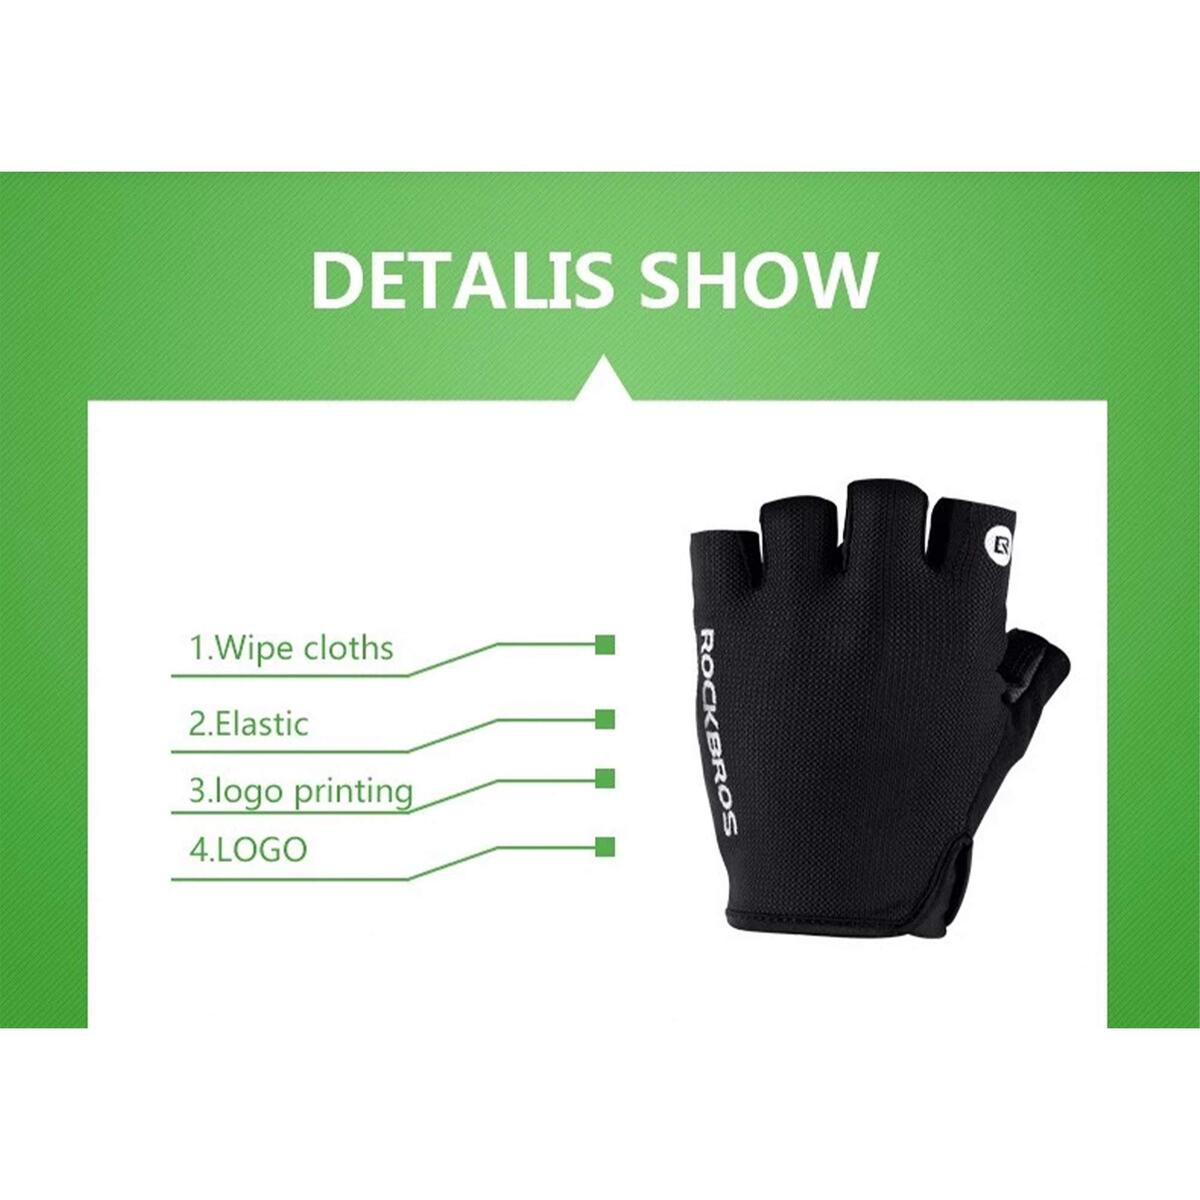 ROCKBROS Half Finger Cycling Gloves Black S106BK Extra Large